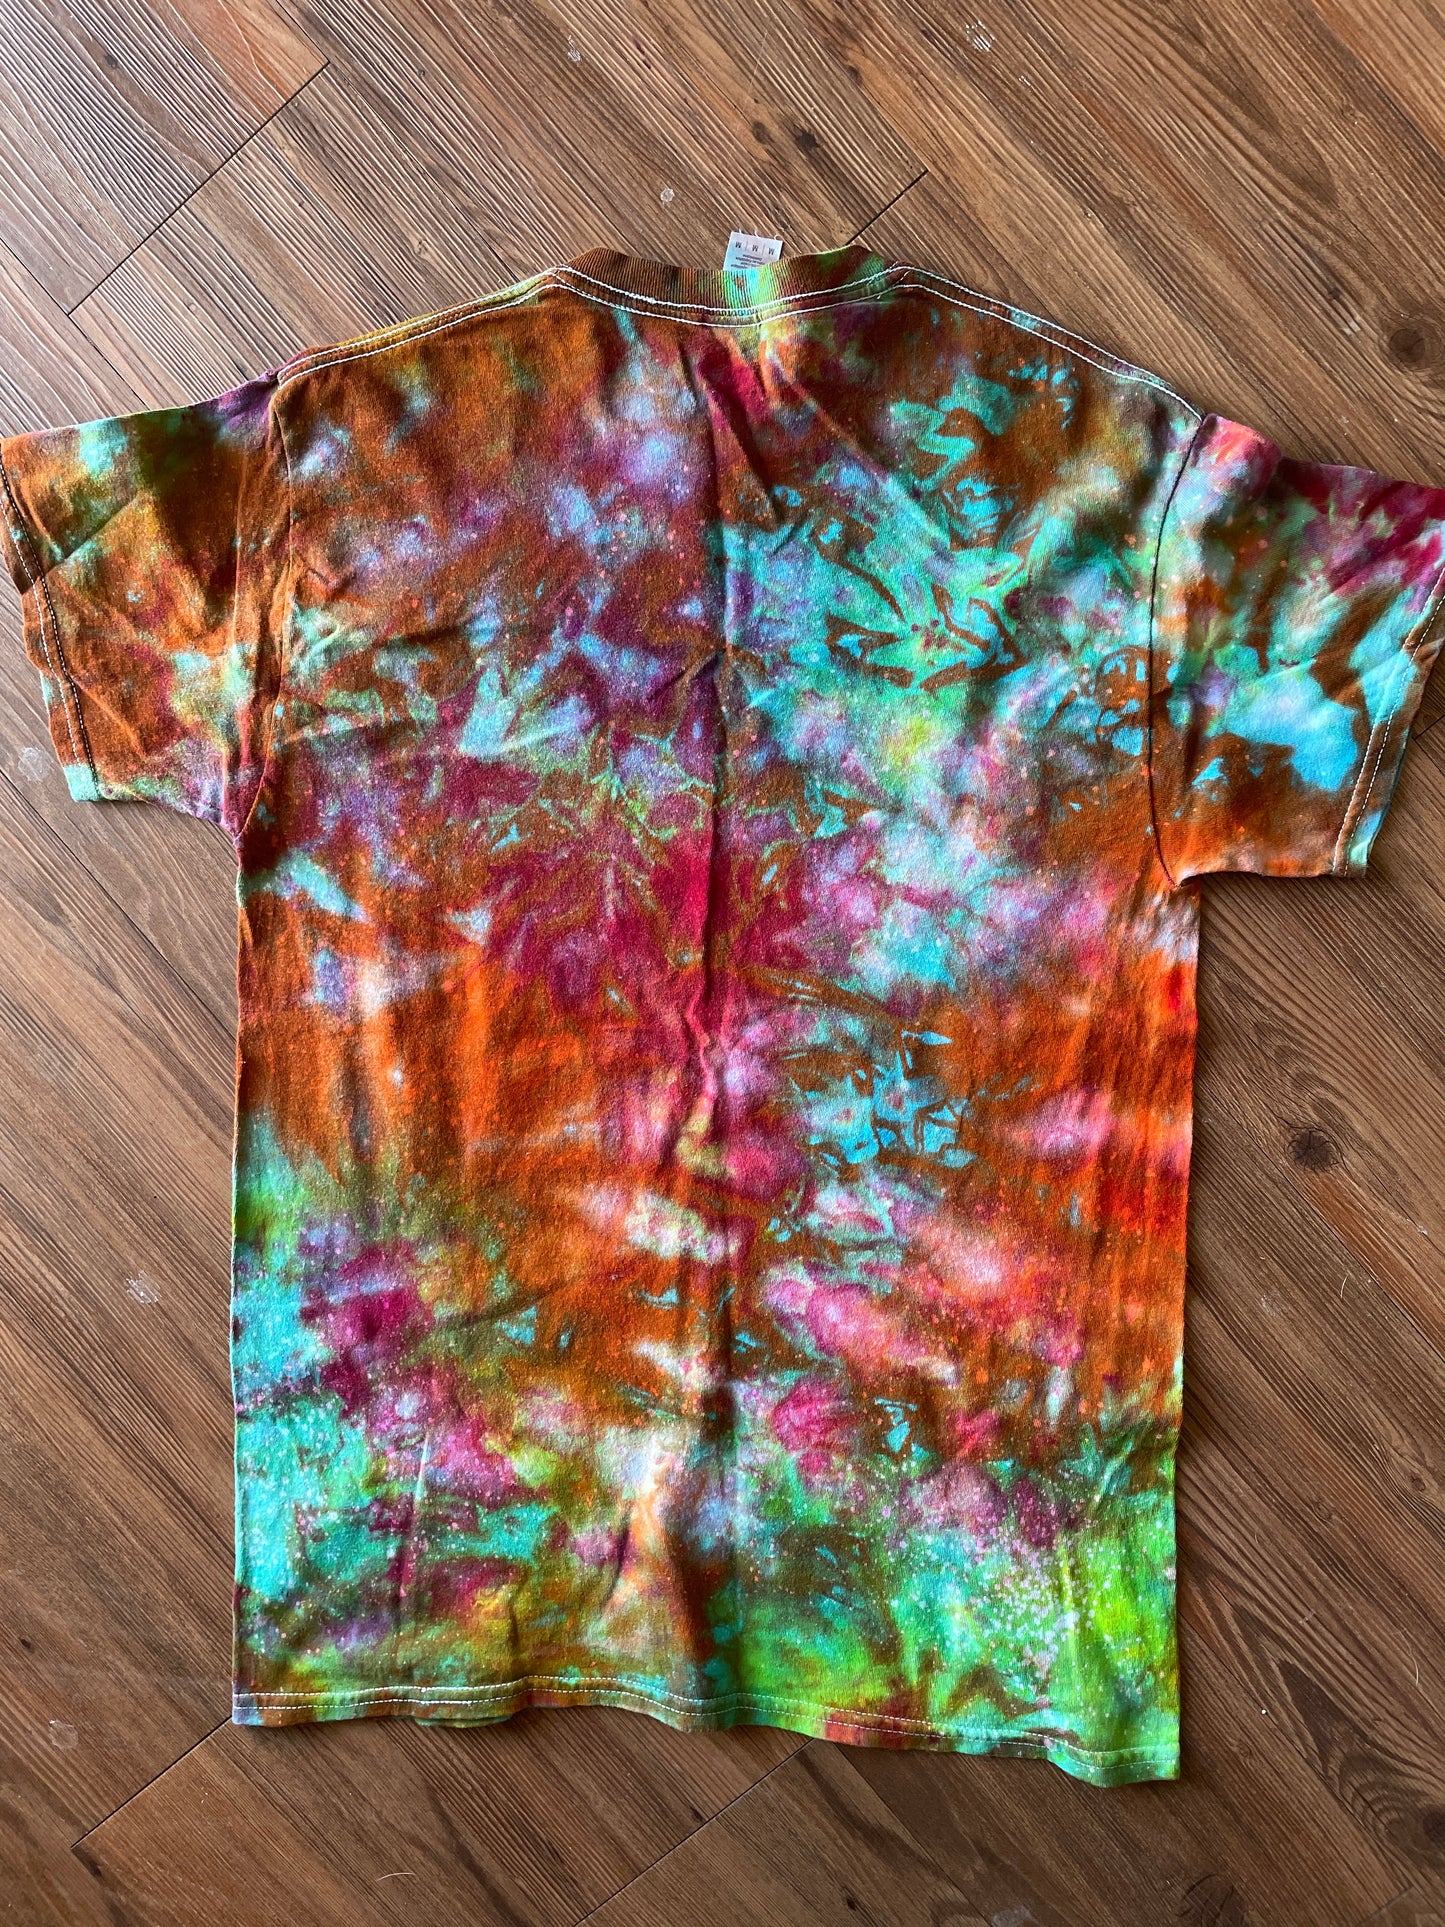 MEDIUM Men’s Rainbow Galaxy Tie Dye T-Shirt | Grunge Galaxy Ice Dye Tie Dye Short Sleeve